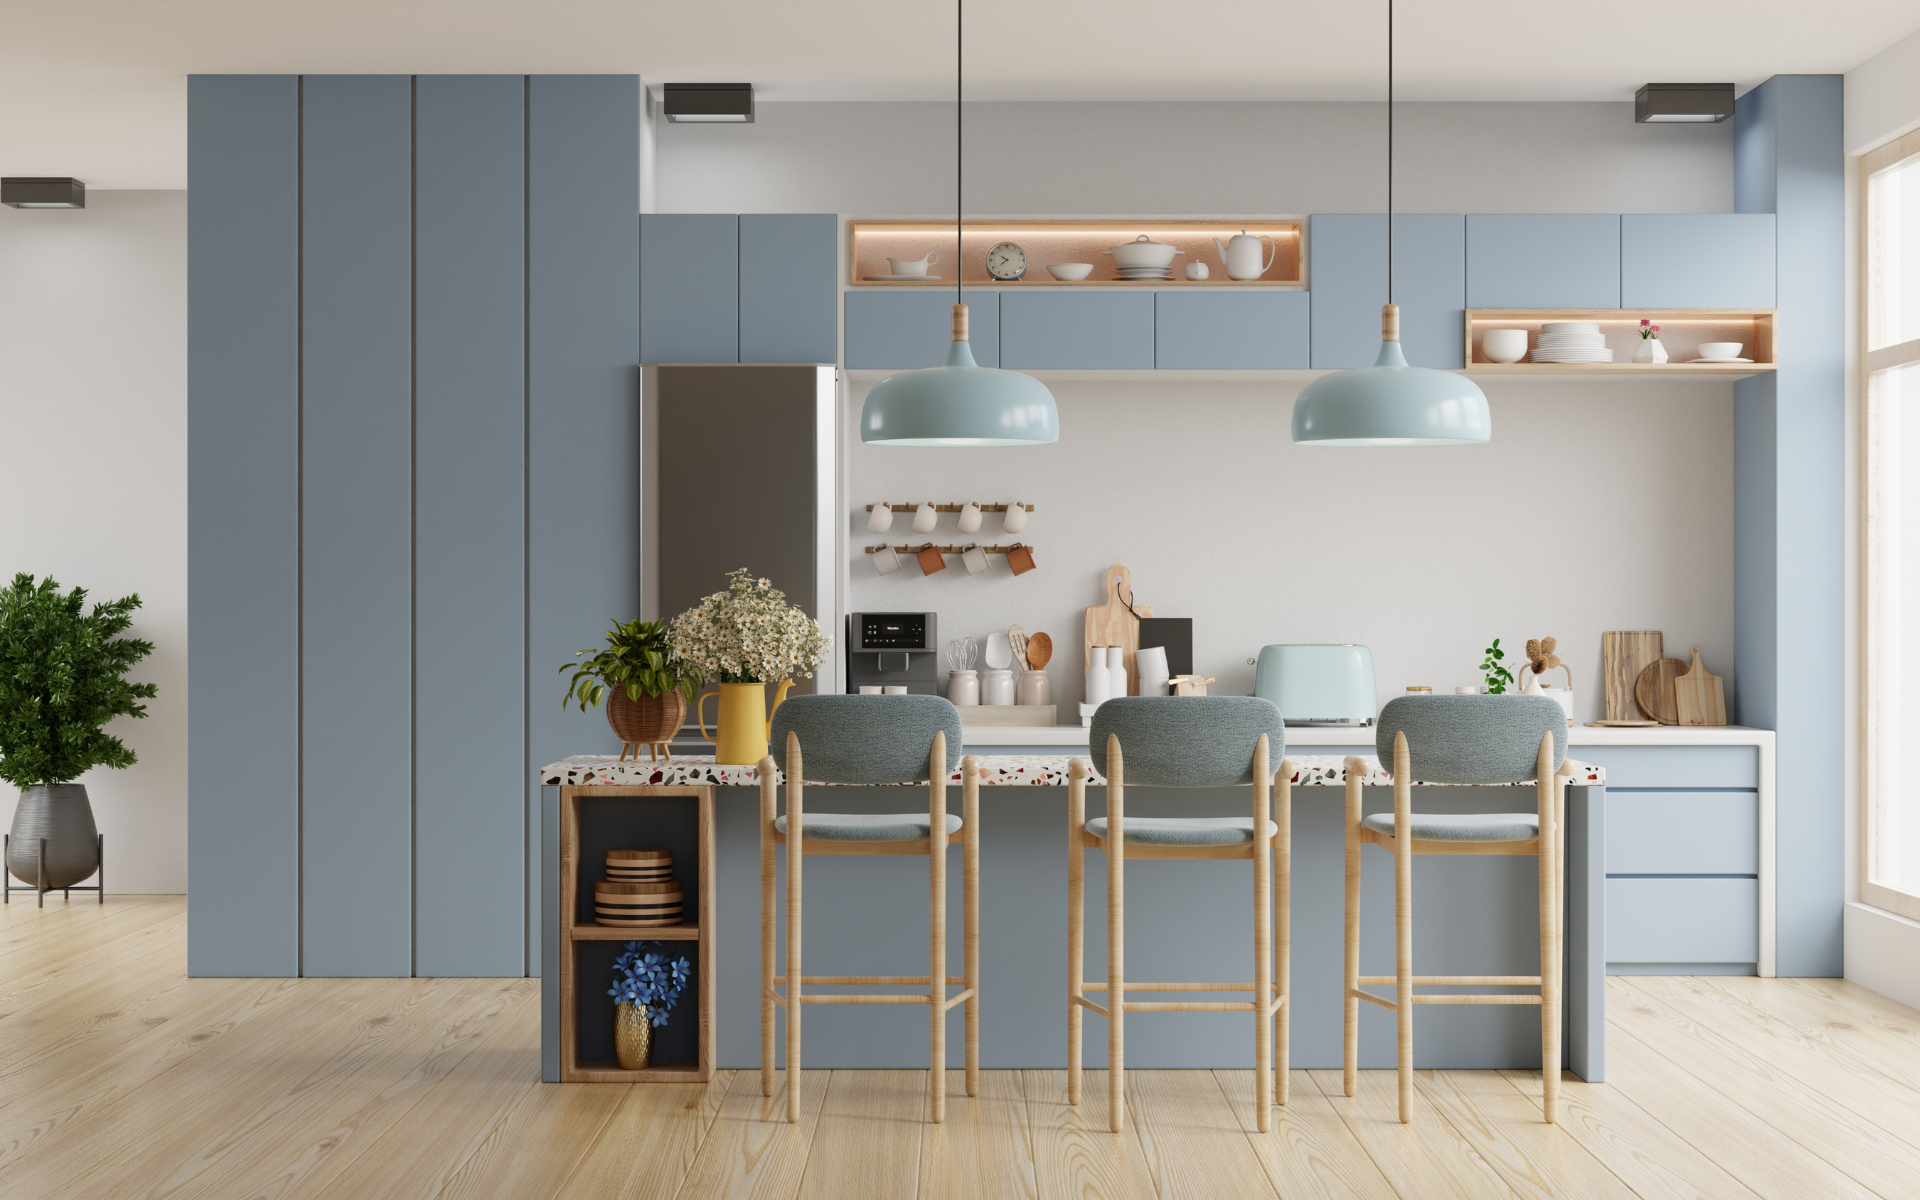 Elegant kitchen cabinet in blue-gray shade